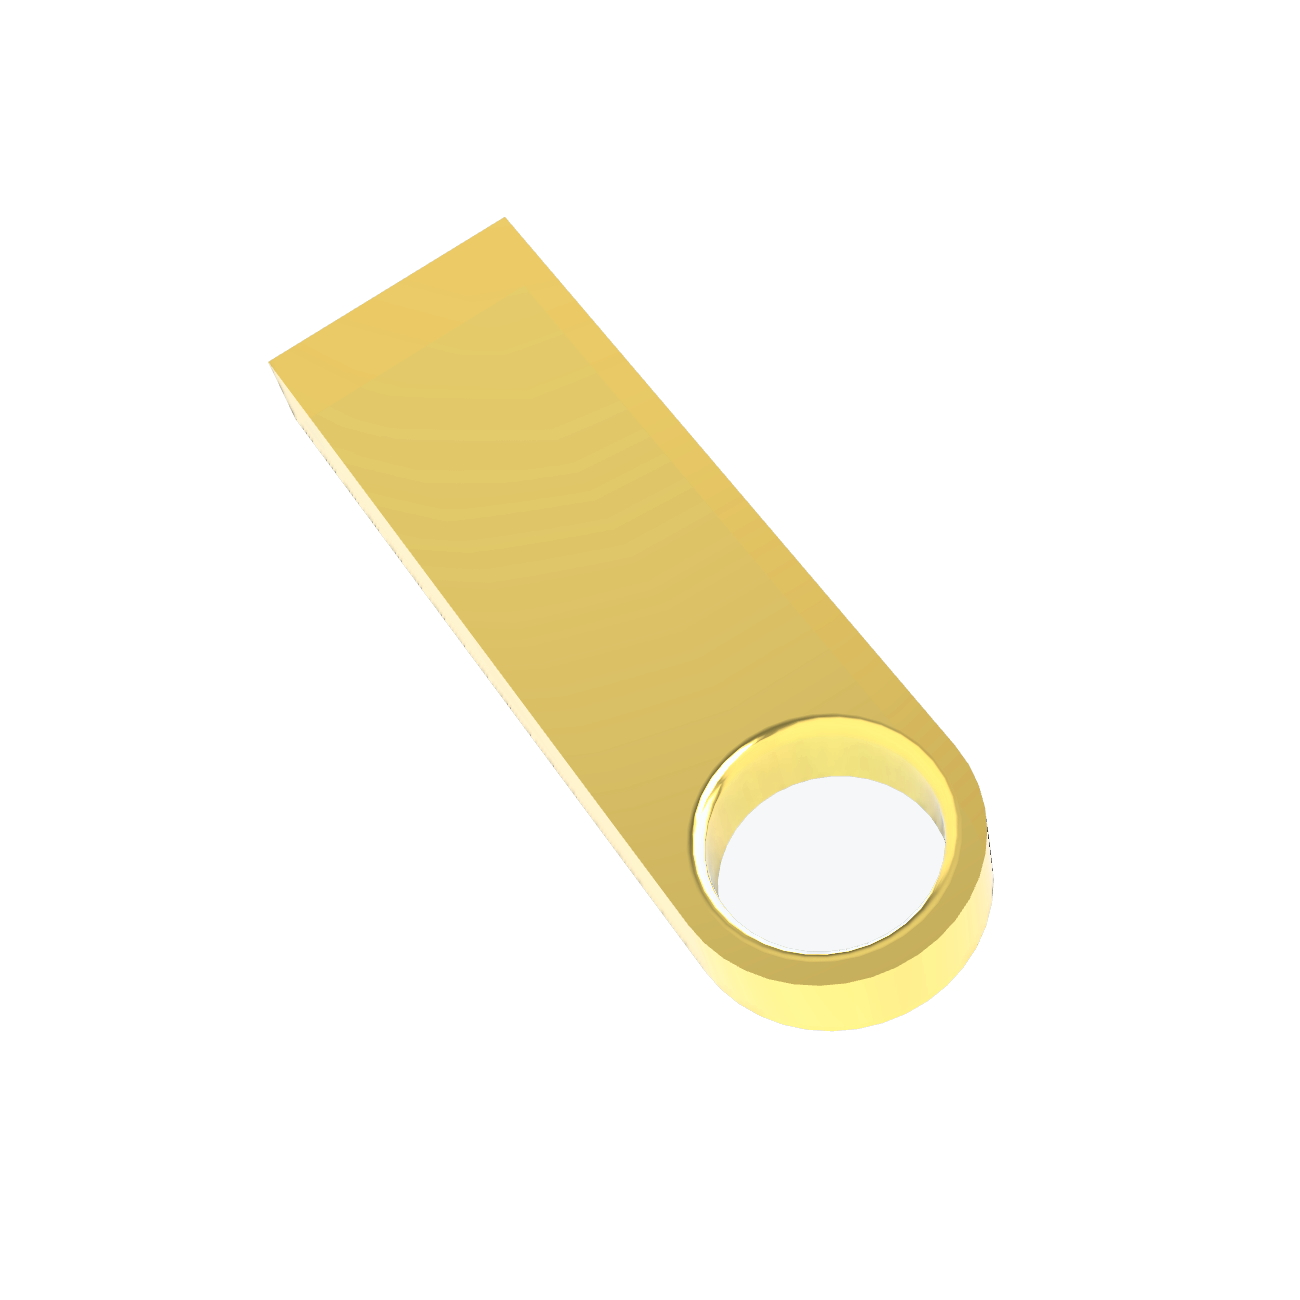 1 (Gold, SE09 GERMANY USB ® GB) USB-Stick